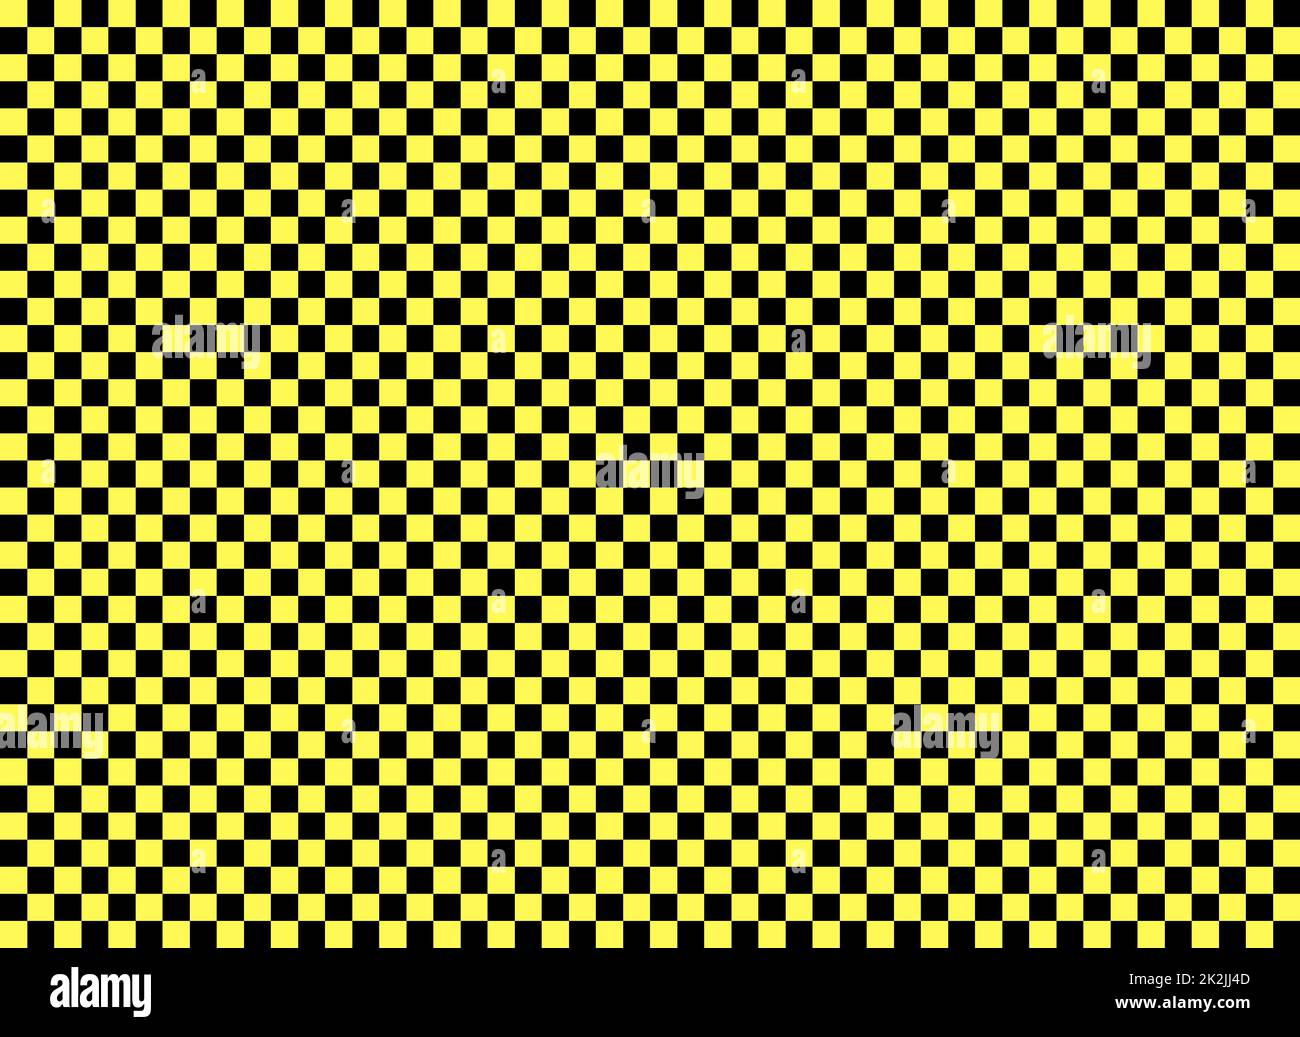 Yellow and black checkered texture Stock Photo